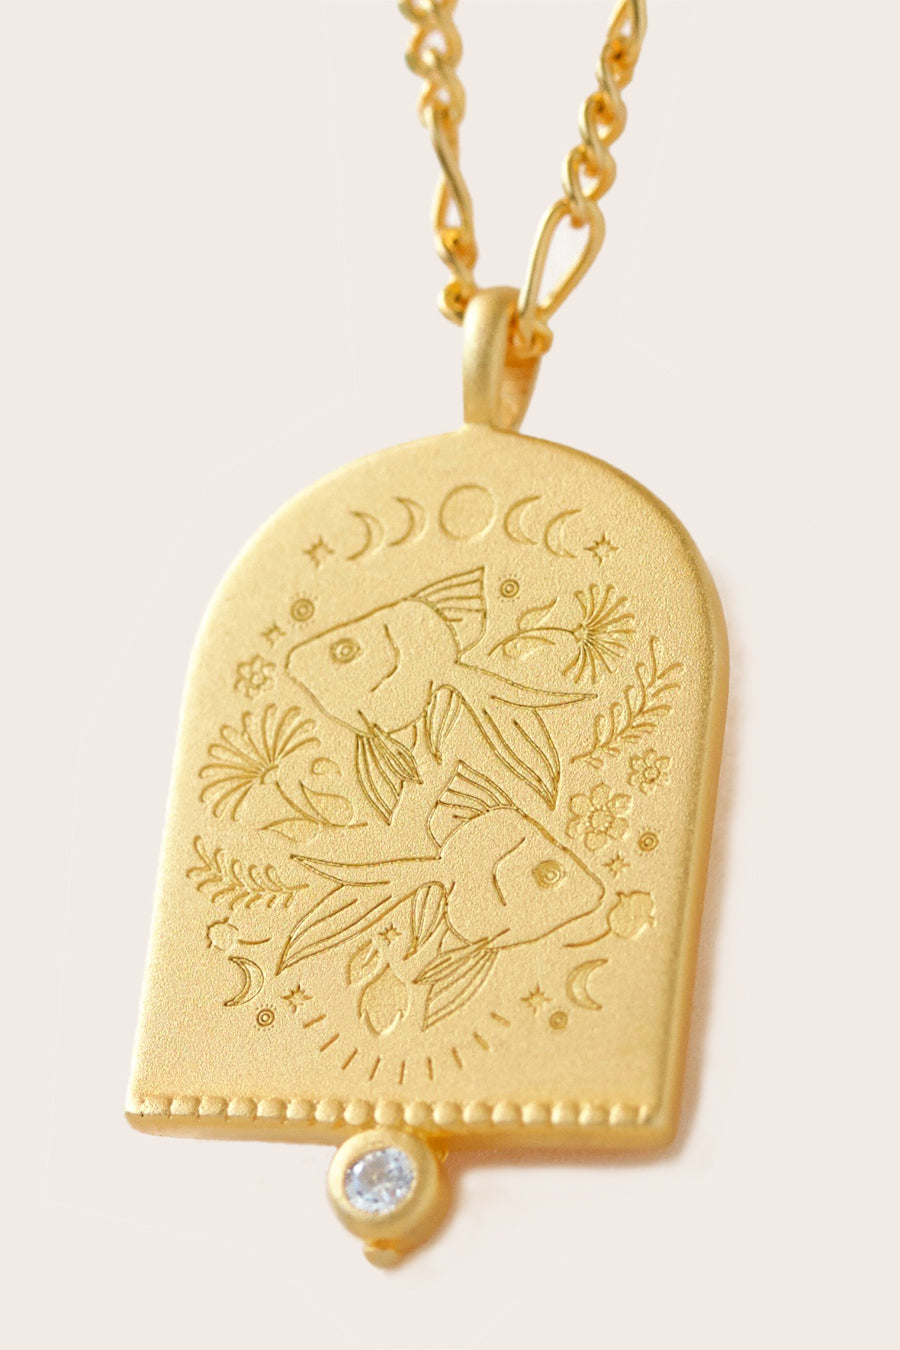 Pisces Fish Zodiac Astrology starsign Necklace in matt gold